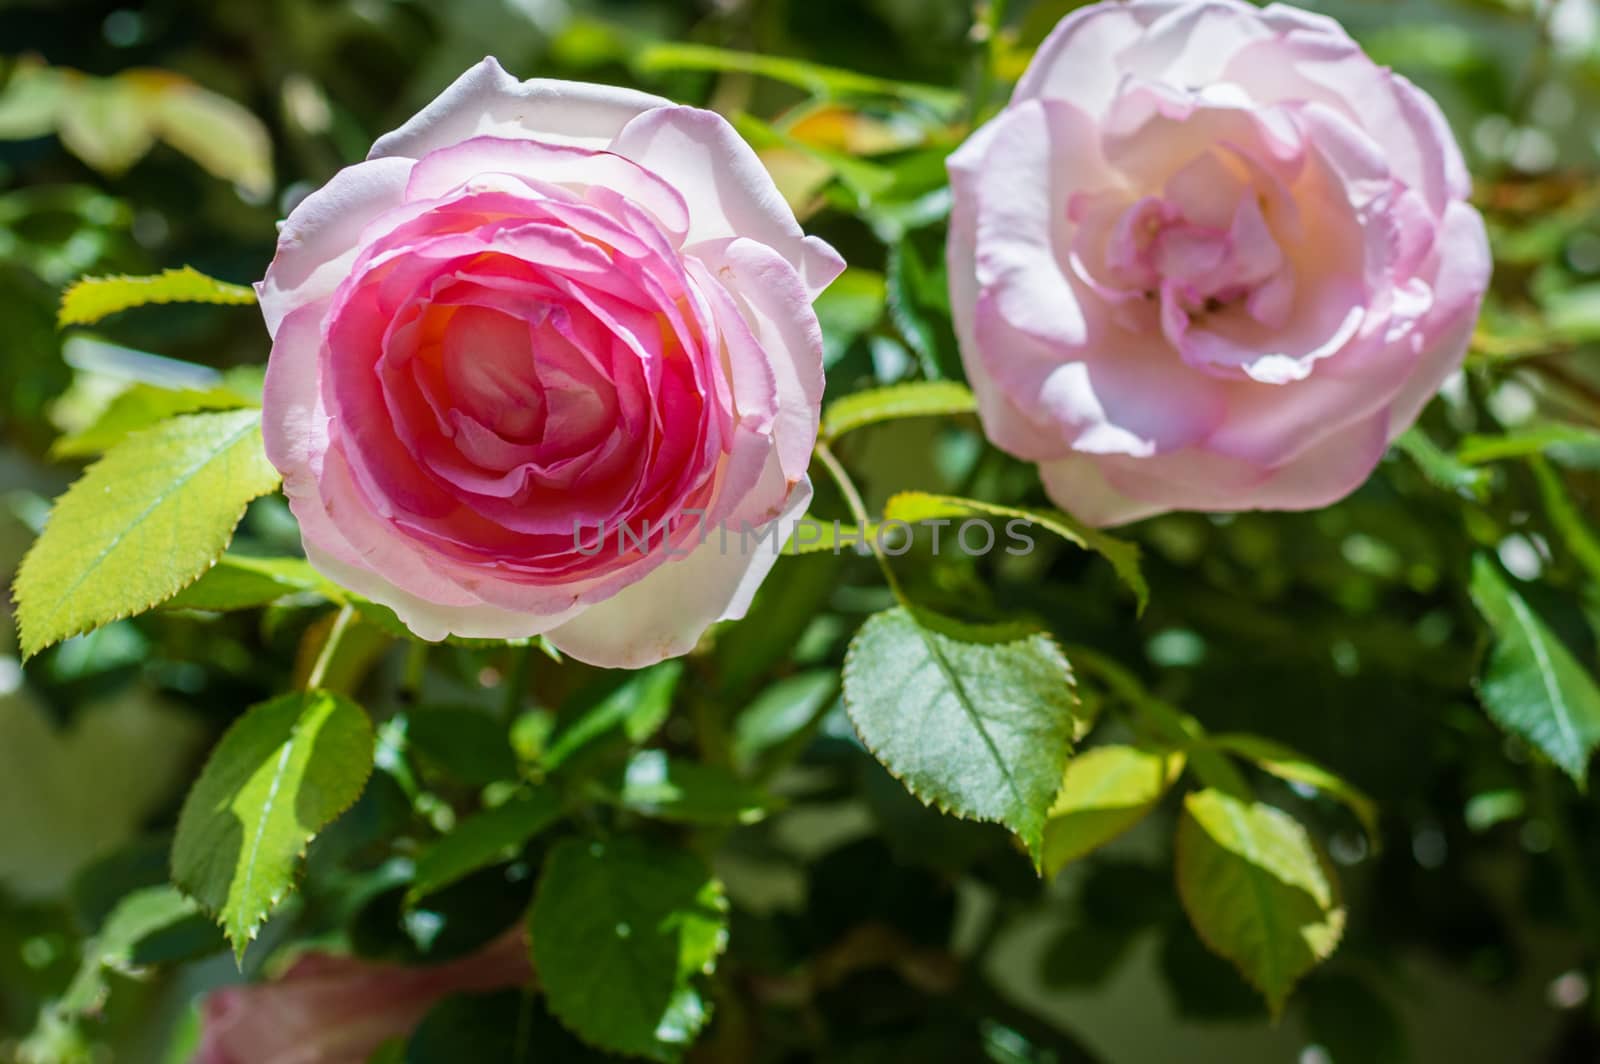 pink roses in the garden by okskukuruza